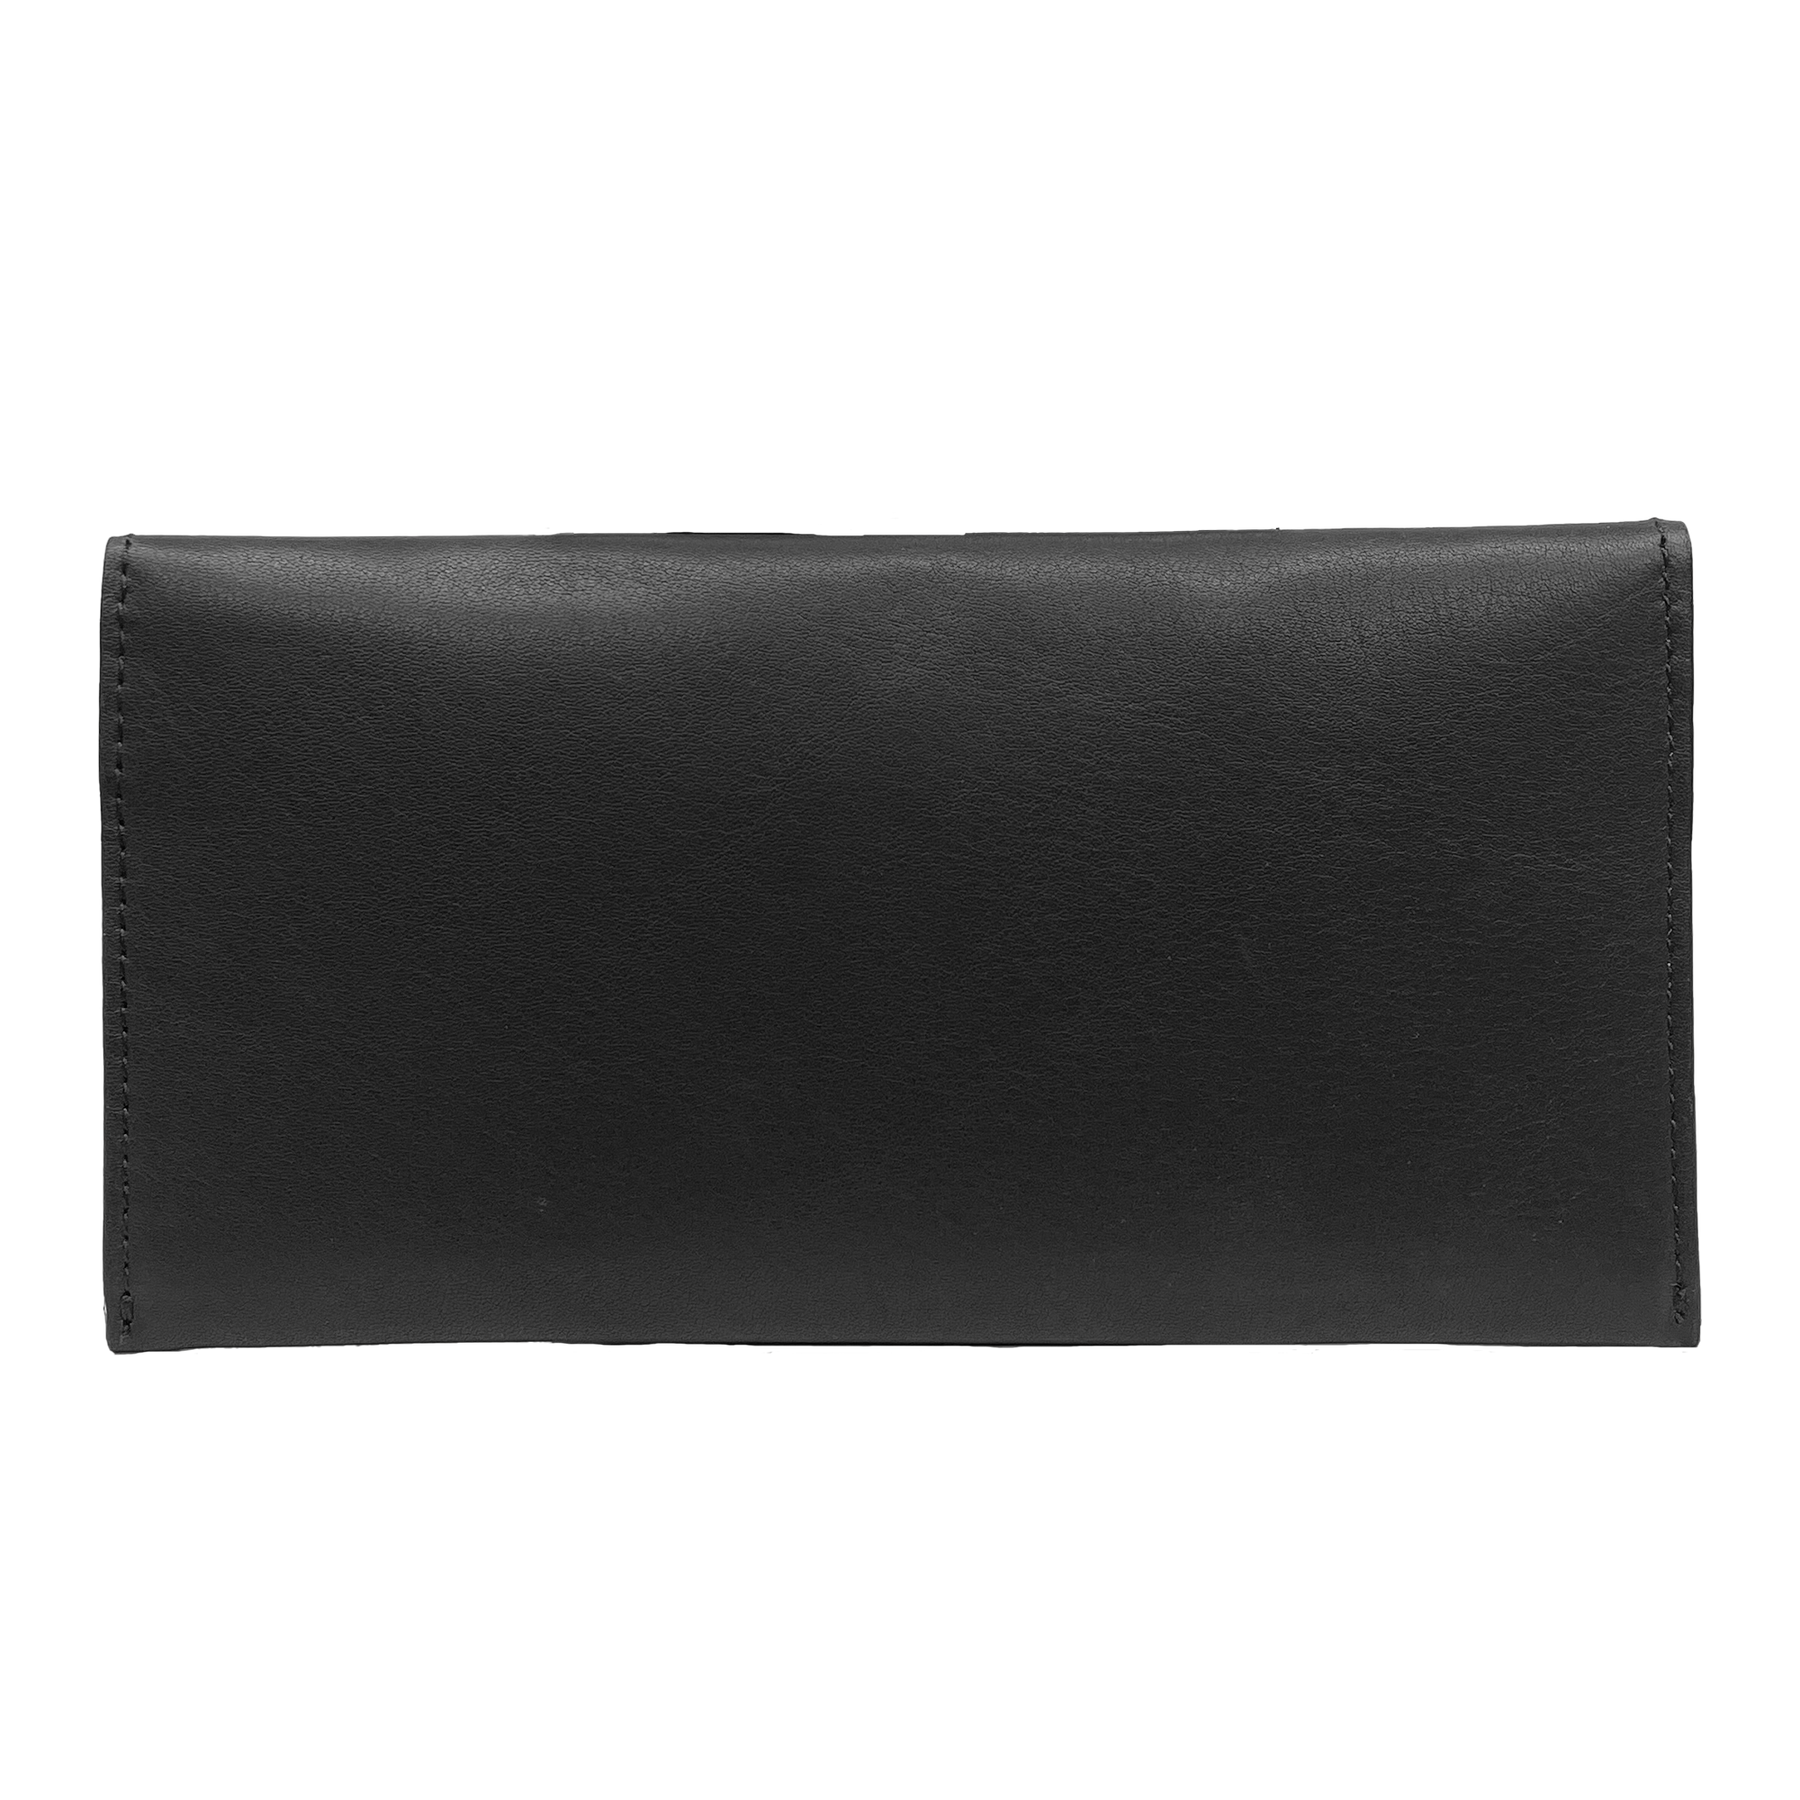 Women's Slim Portfolio in real leather with button closure 19.2x10x6cm